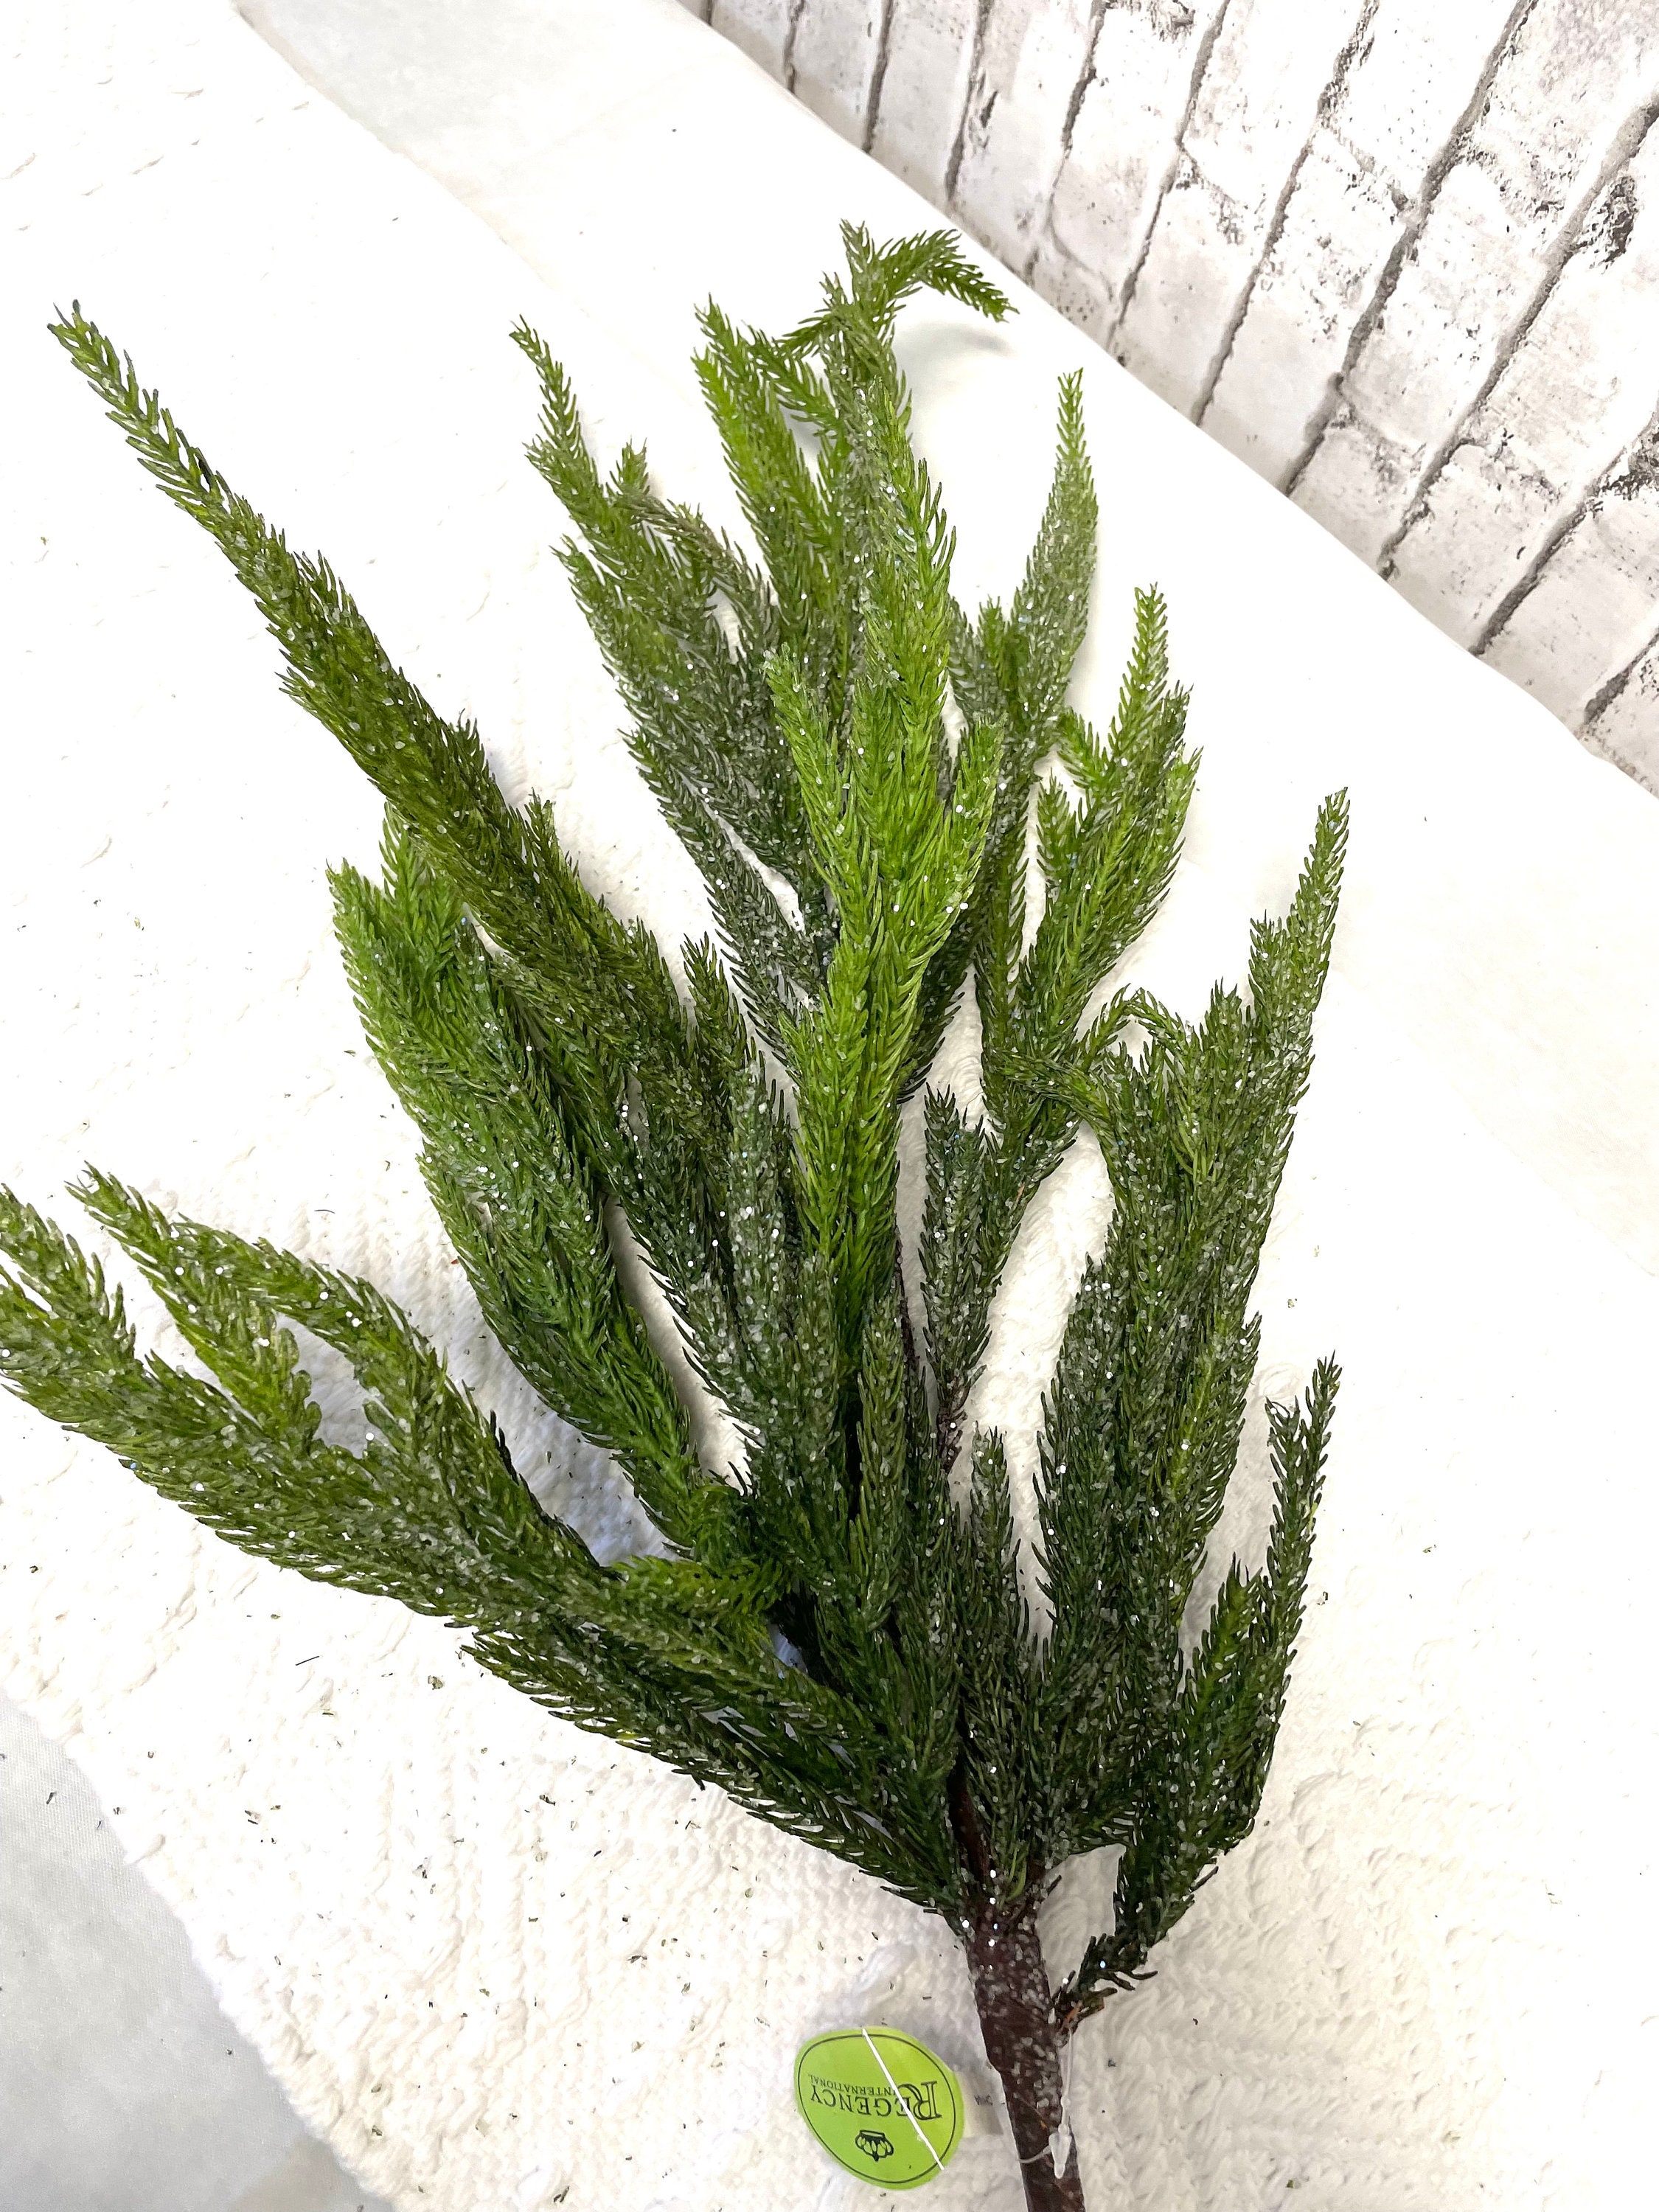 30” ICED Garden Norfolk Pine Branch Christmas Spray